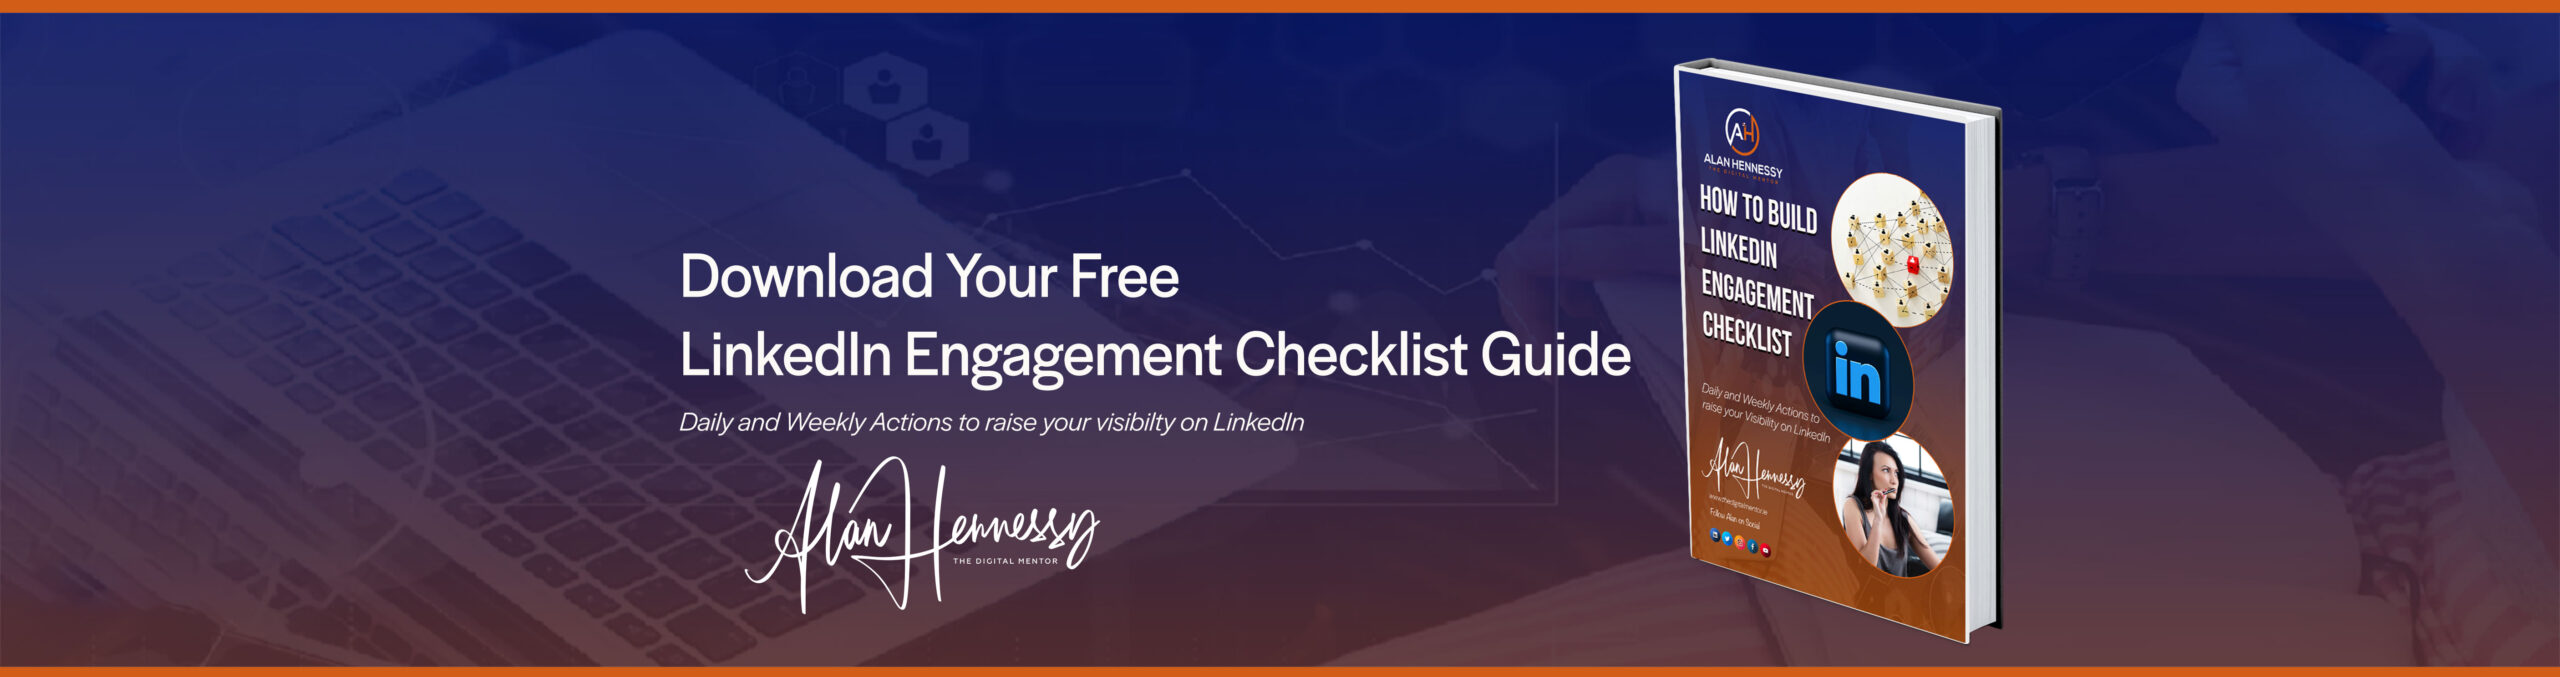 LinkedIn Engagement Checklist